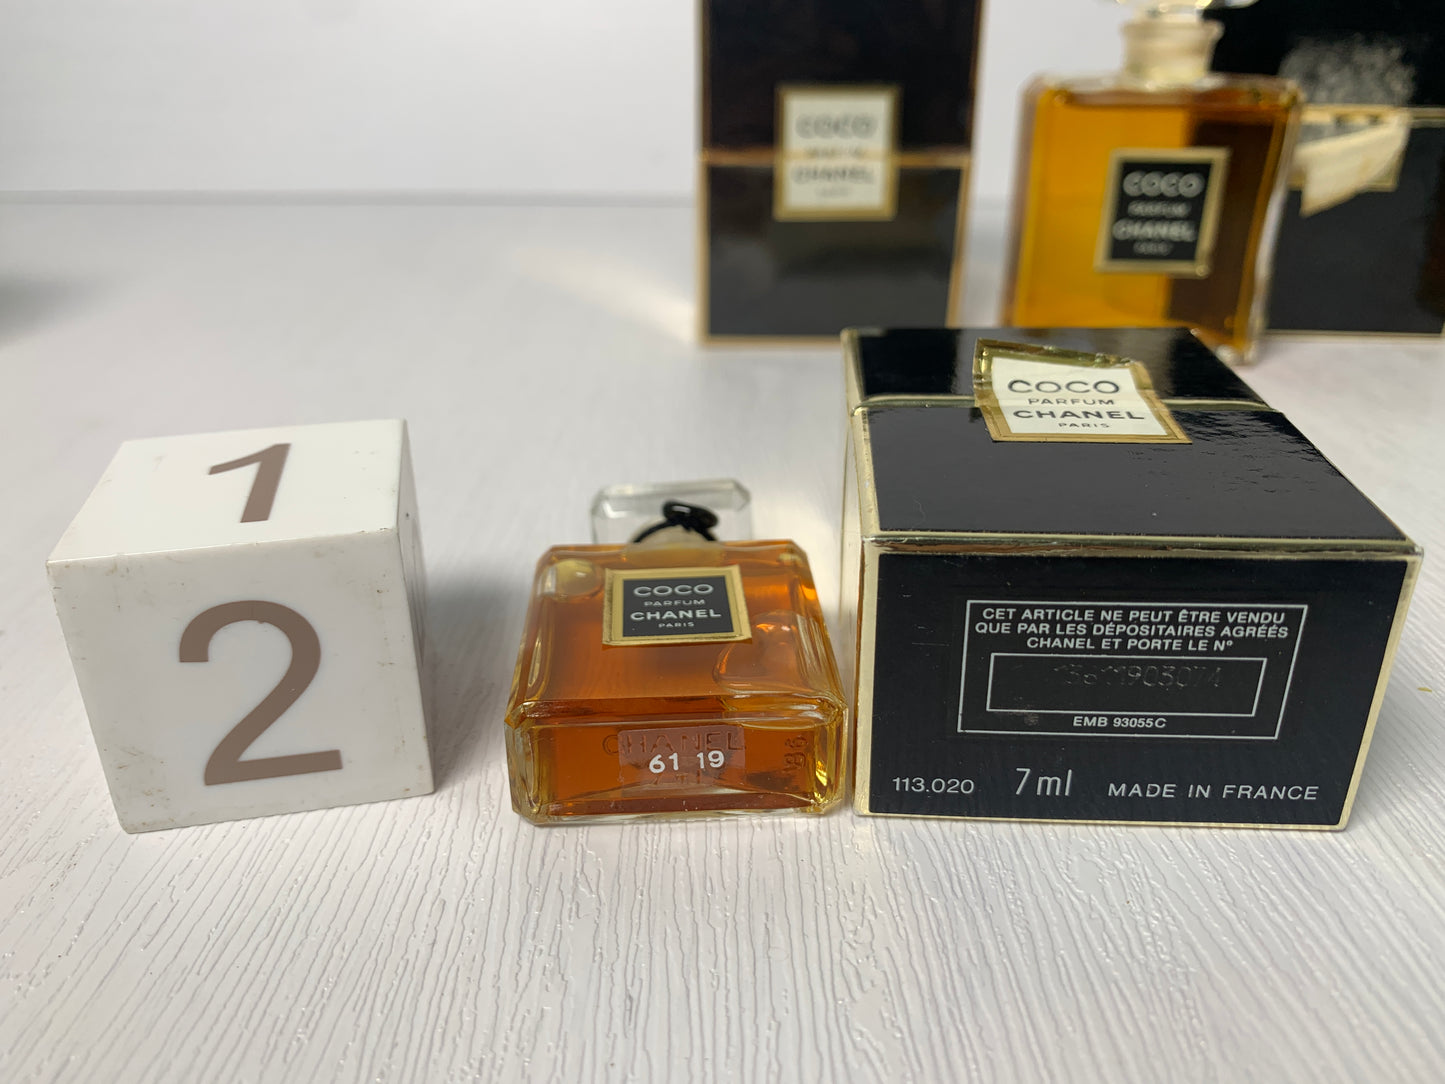 Rare Chanel  coco parfum 7ml 15ml 30ml Perfume - 12FEB22